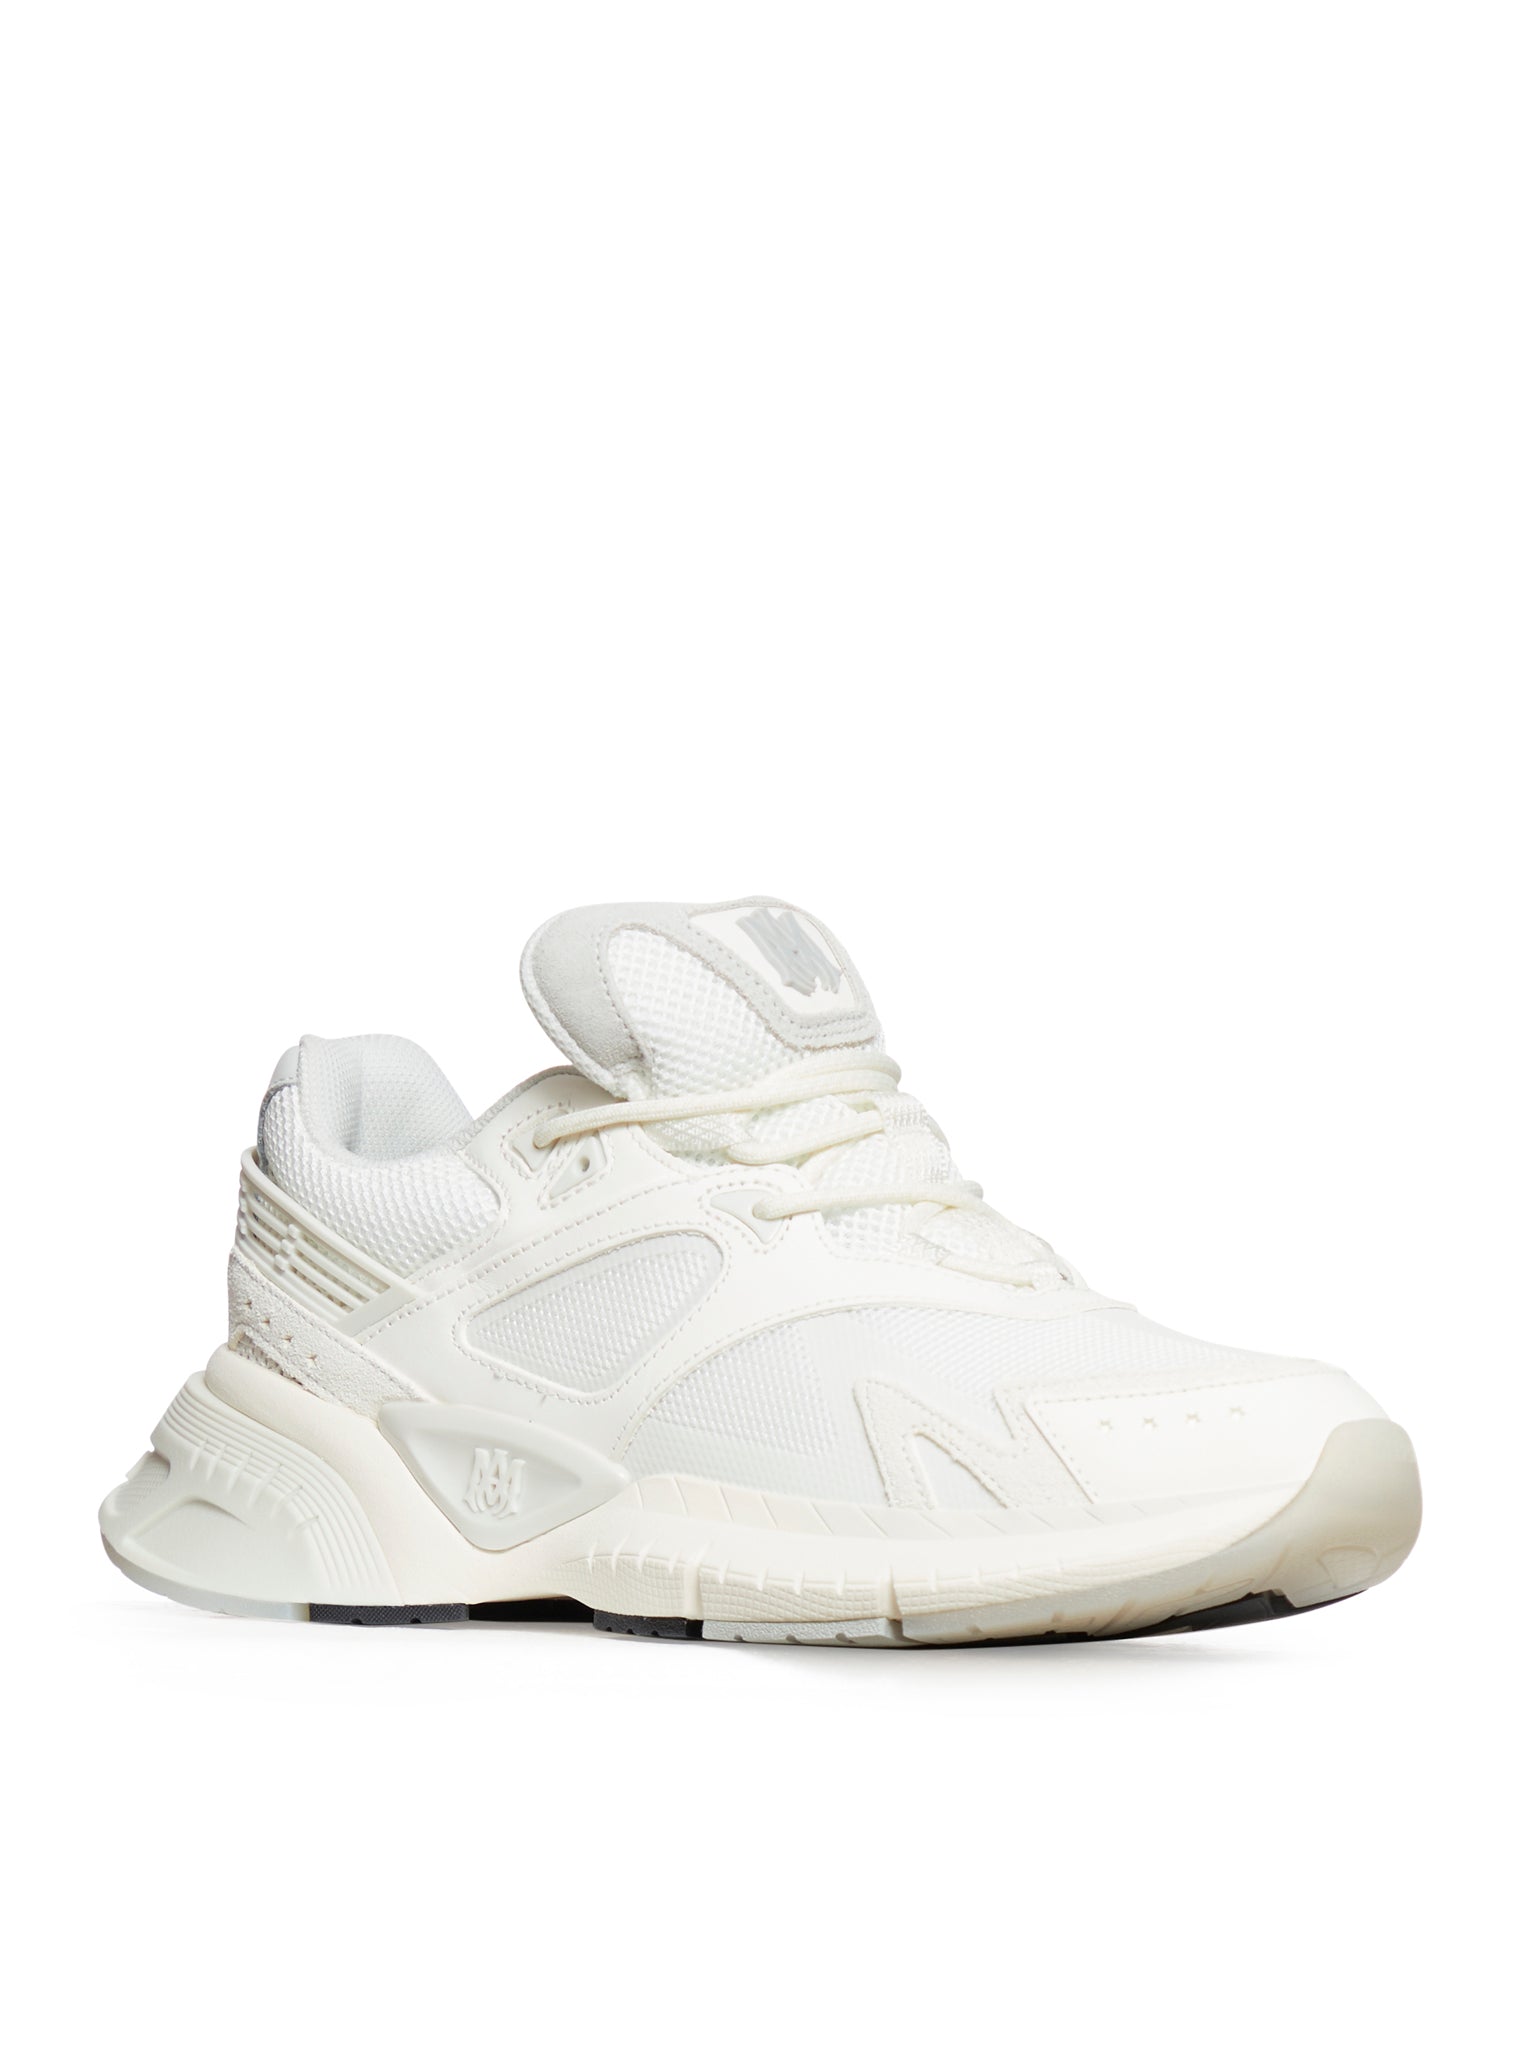 MA Runner sneakers in white mesh